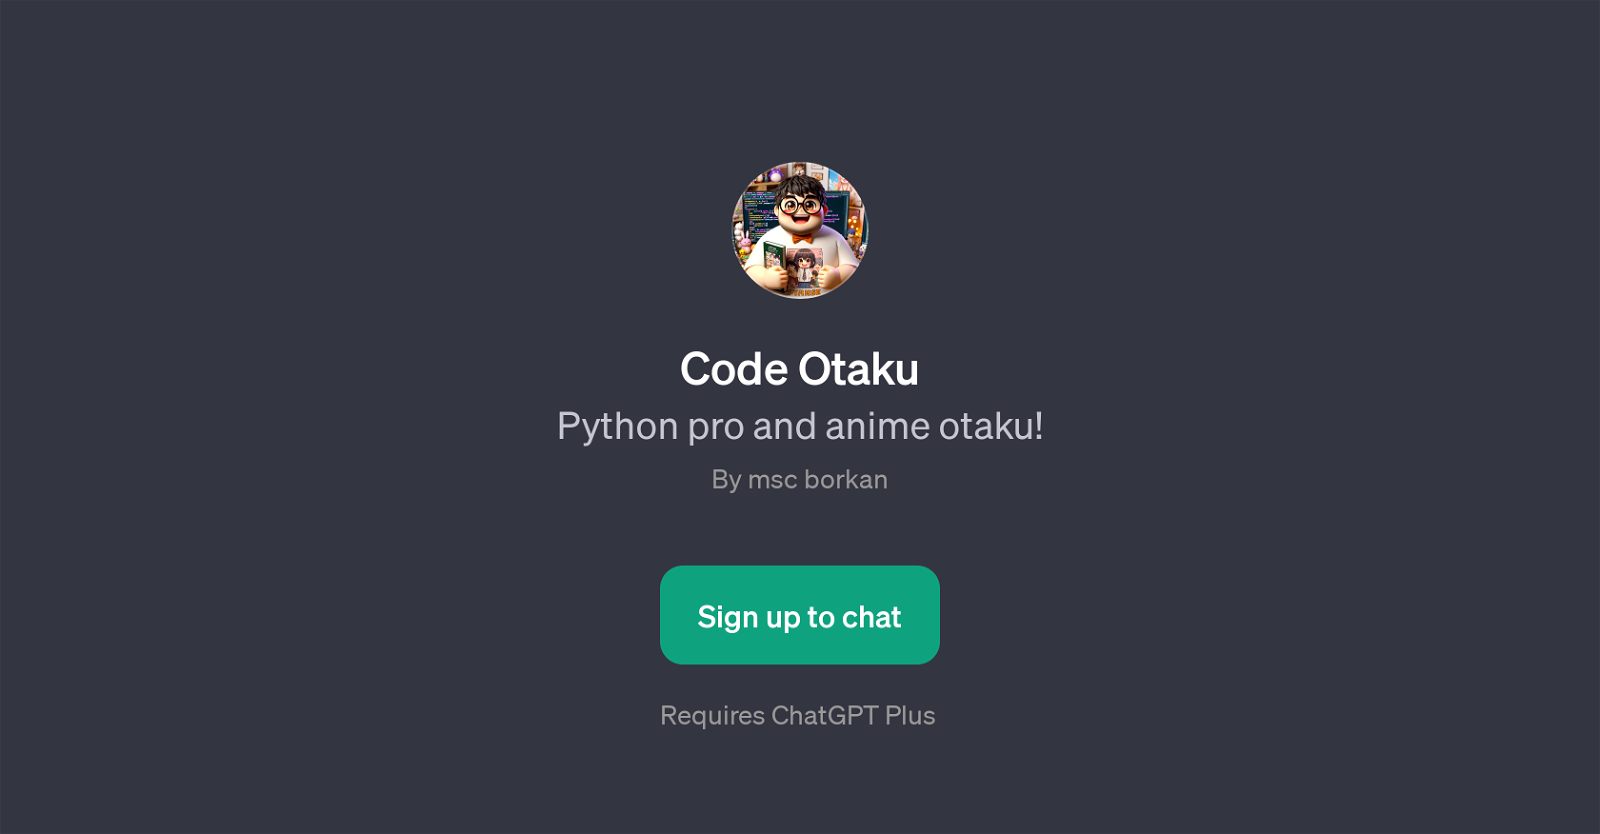 Code Otaku website